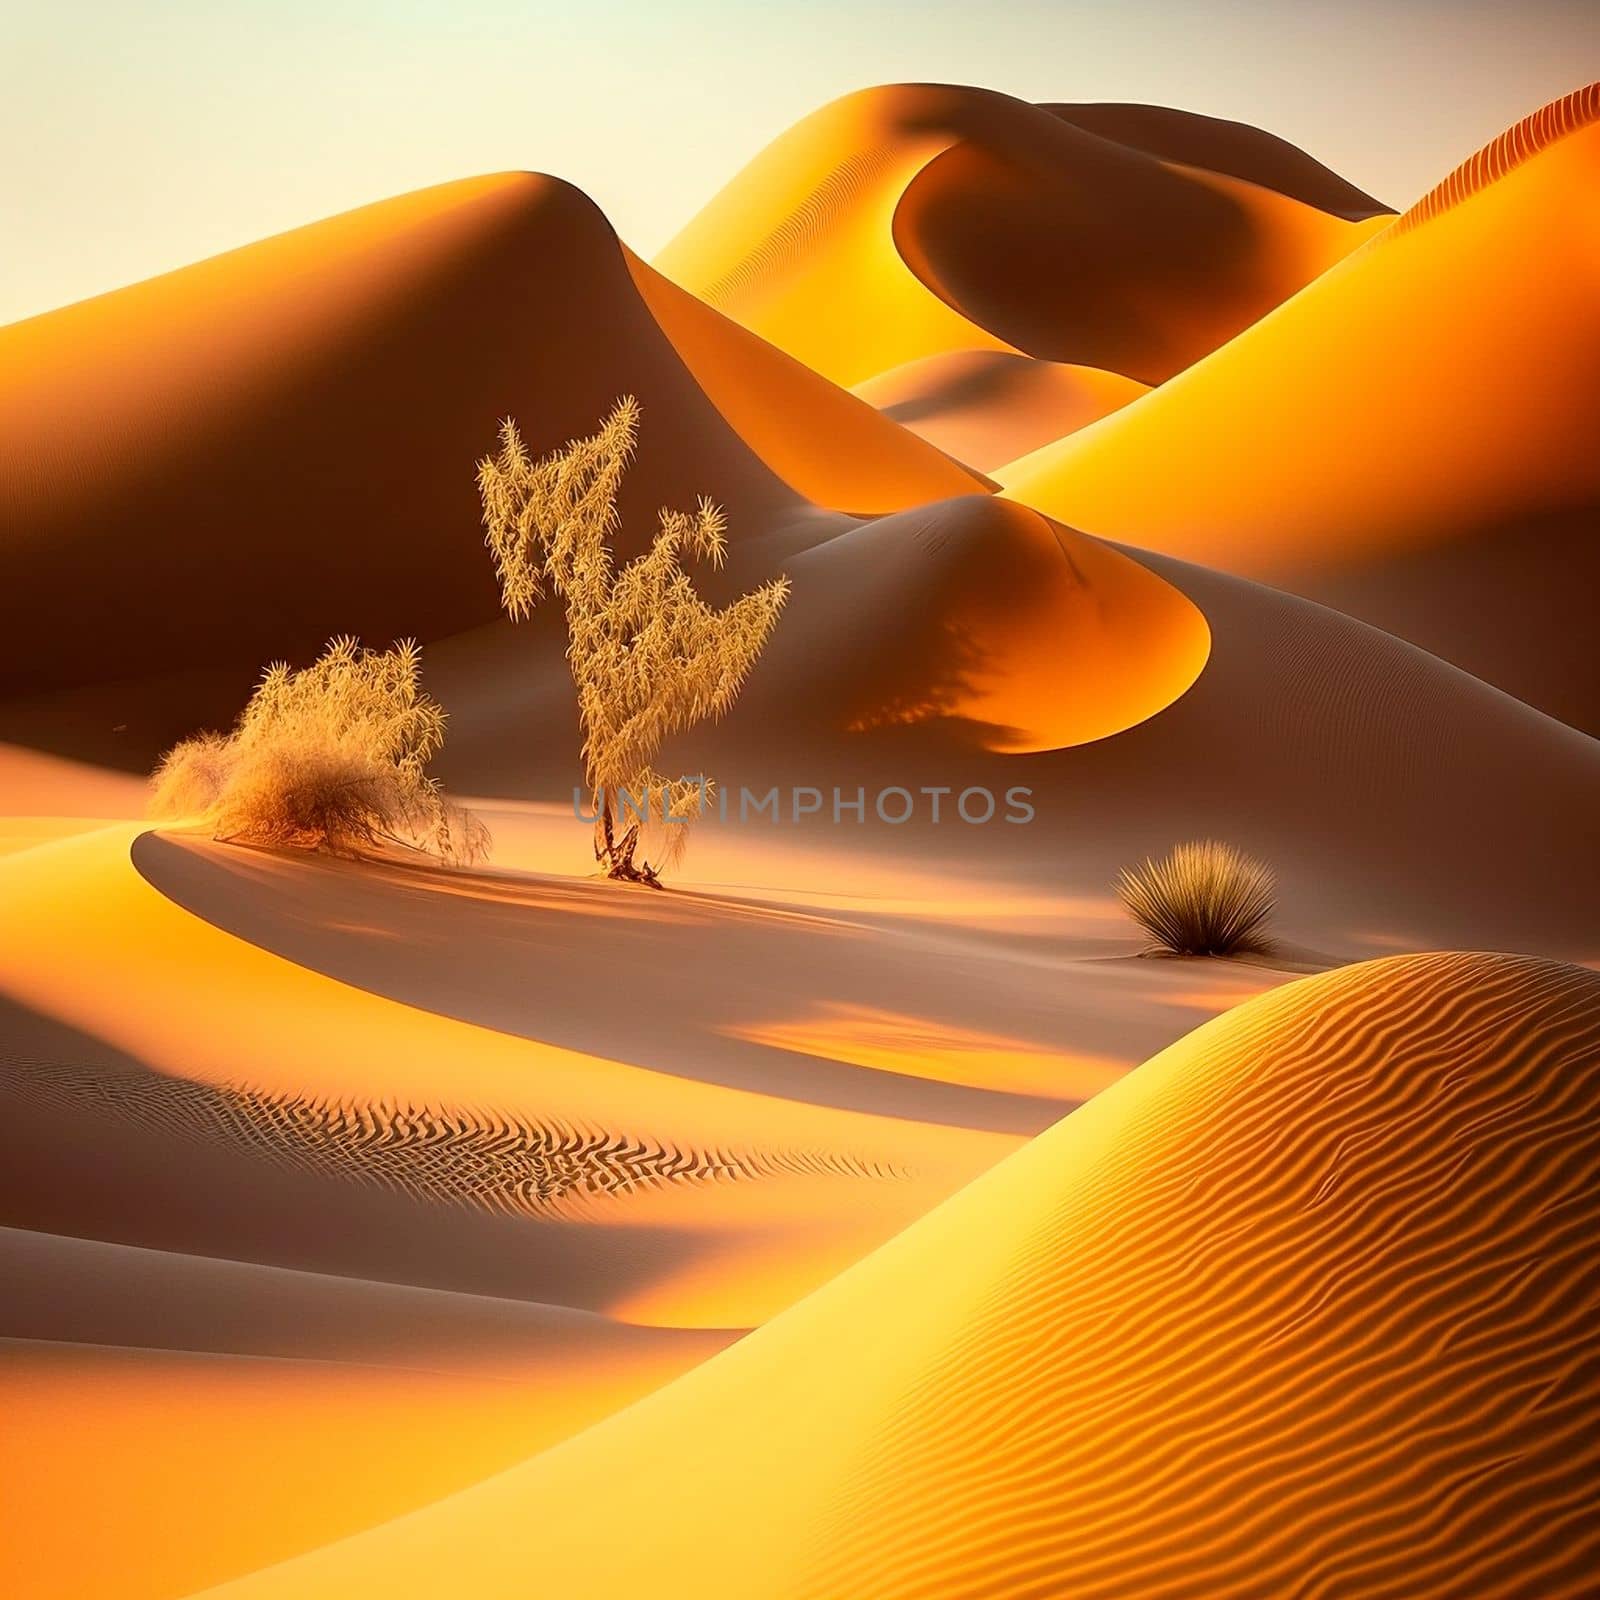 Cinematic depiction of the desert and desert dunes by NeuroSky